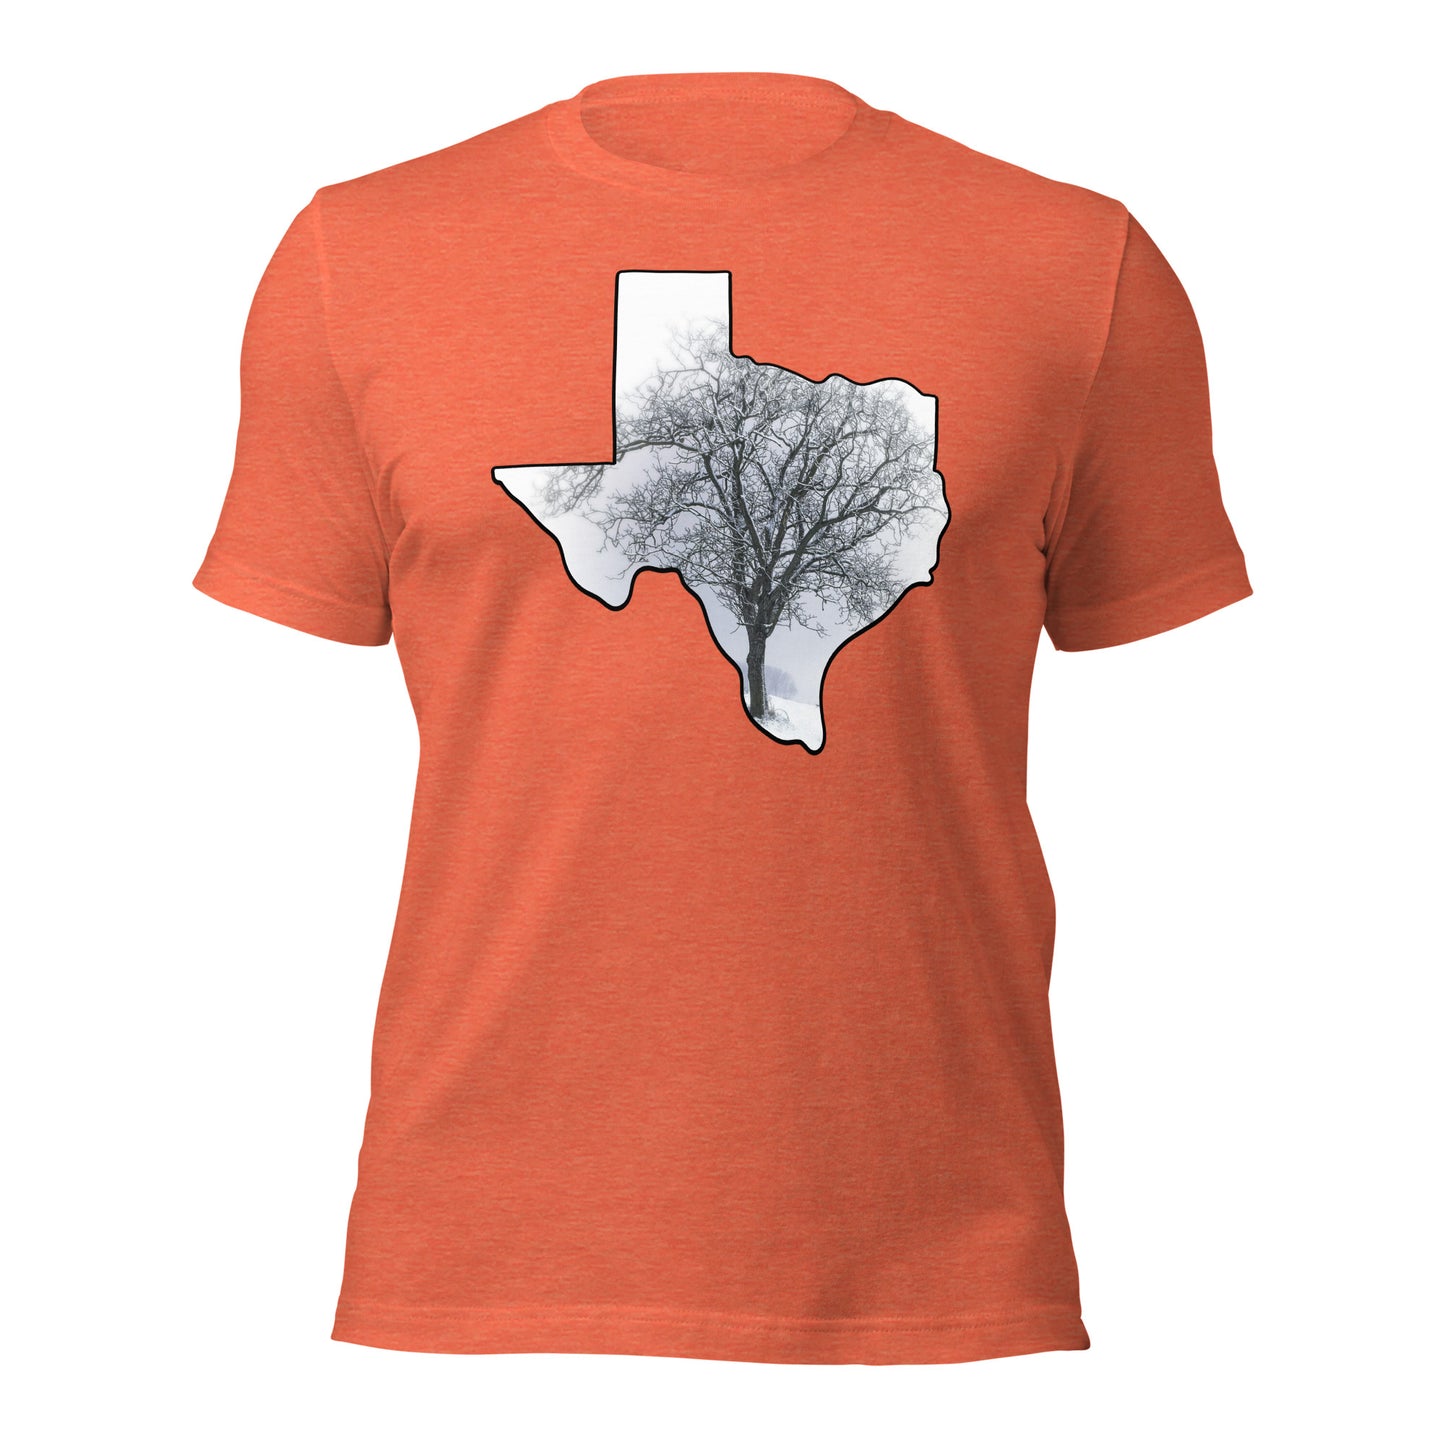 Unisex Texas T-shirt, Texas Shirt, Texas Tee, Texas Tshirt, Tshirts for Women, Texas Gift Shirt, Tshirts for Men, State Shirt